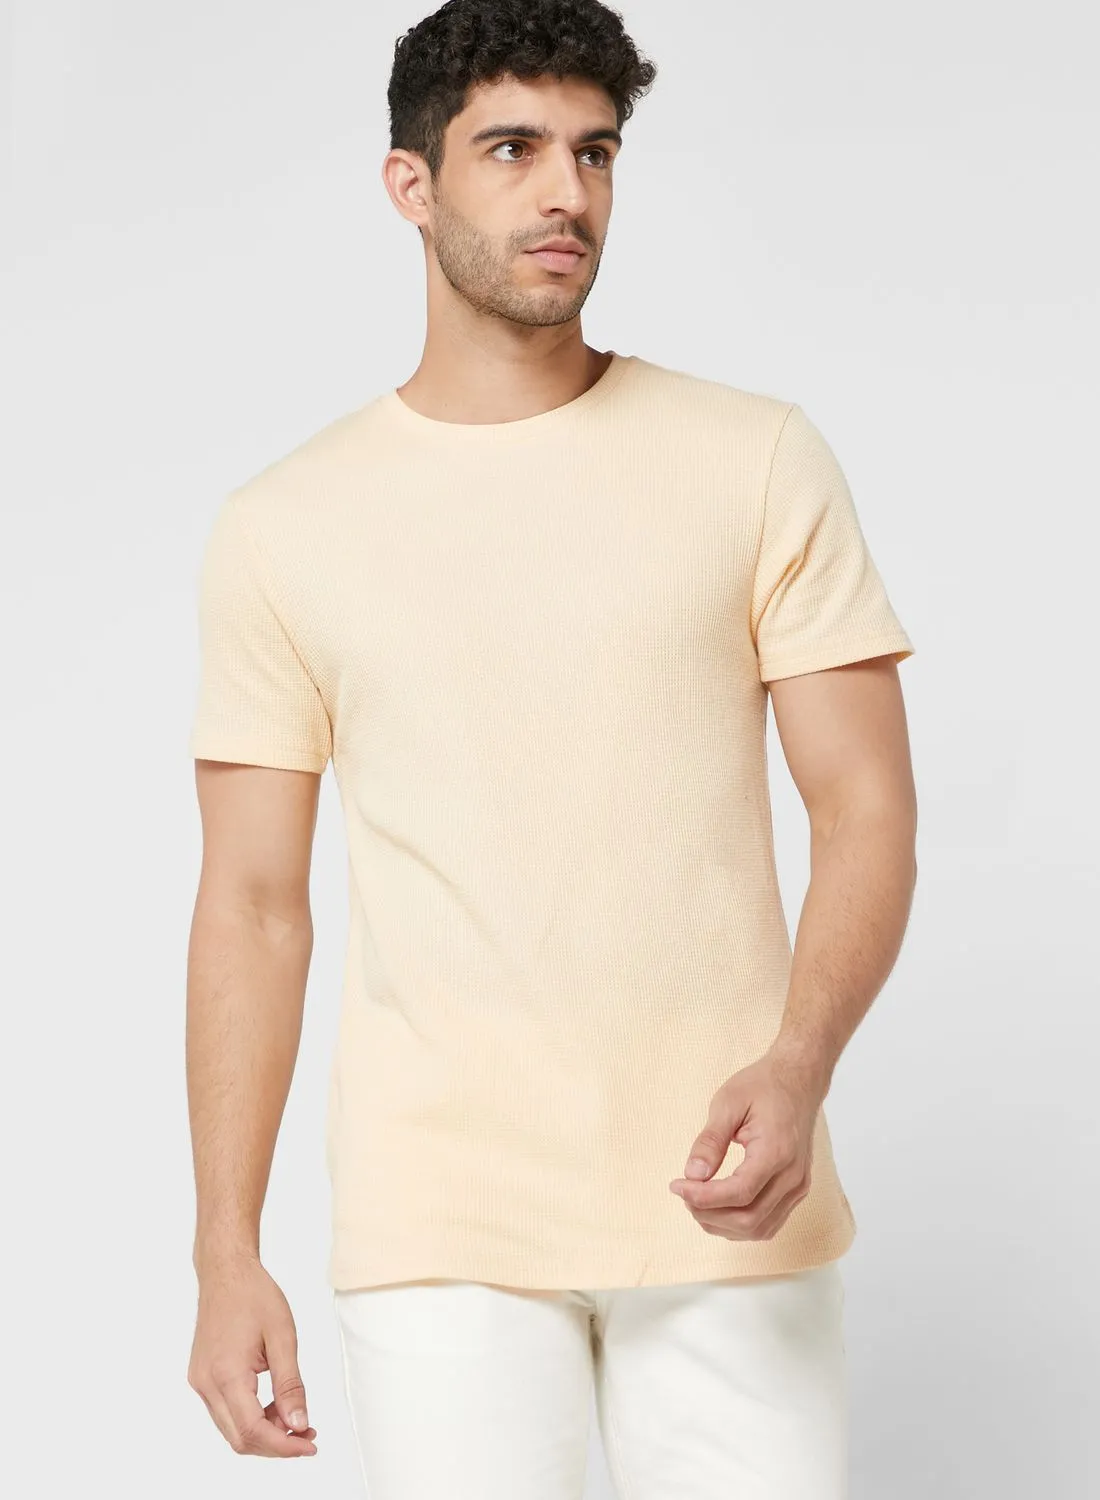 Cotton On Essential Crew Neck T-Shirt